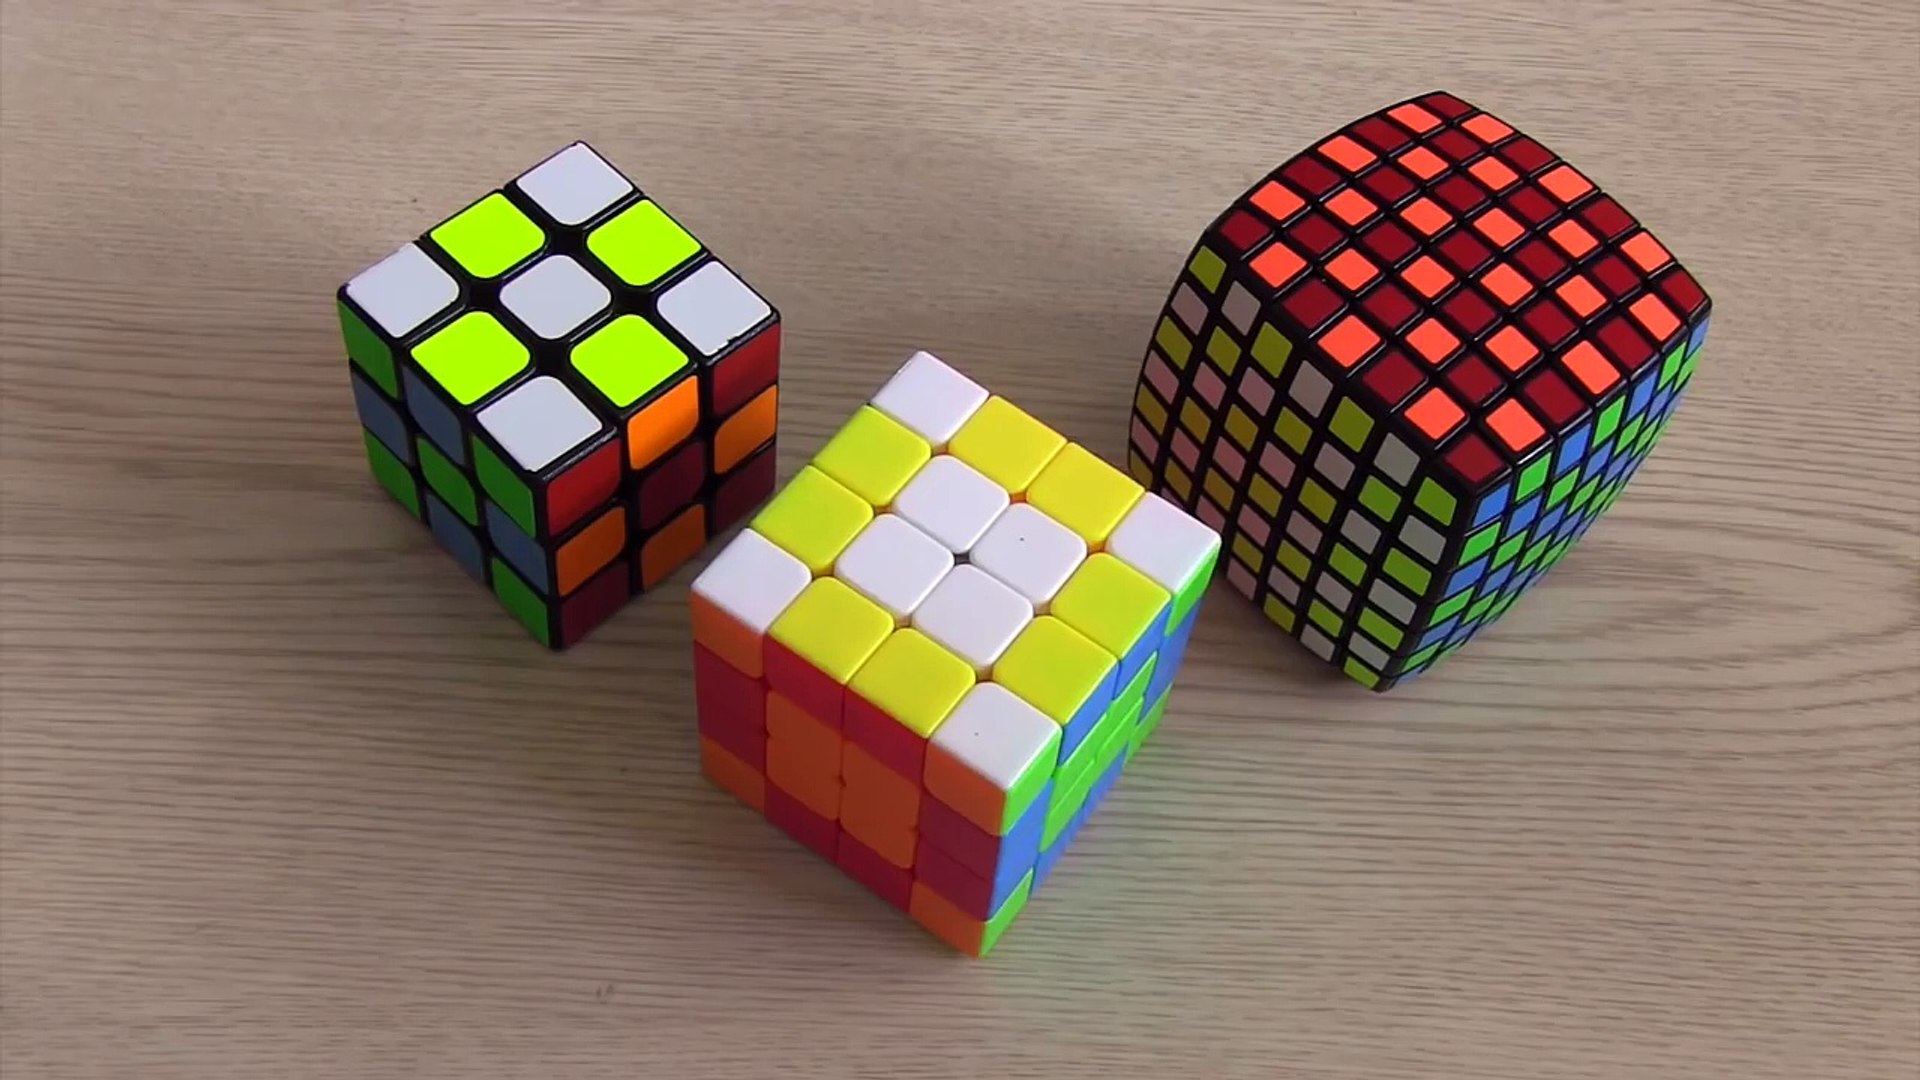 7x7 pattern : r/Cubers